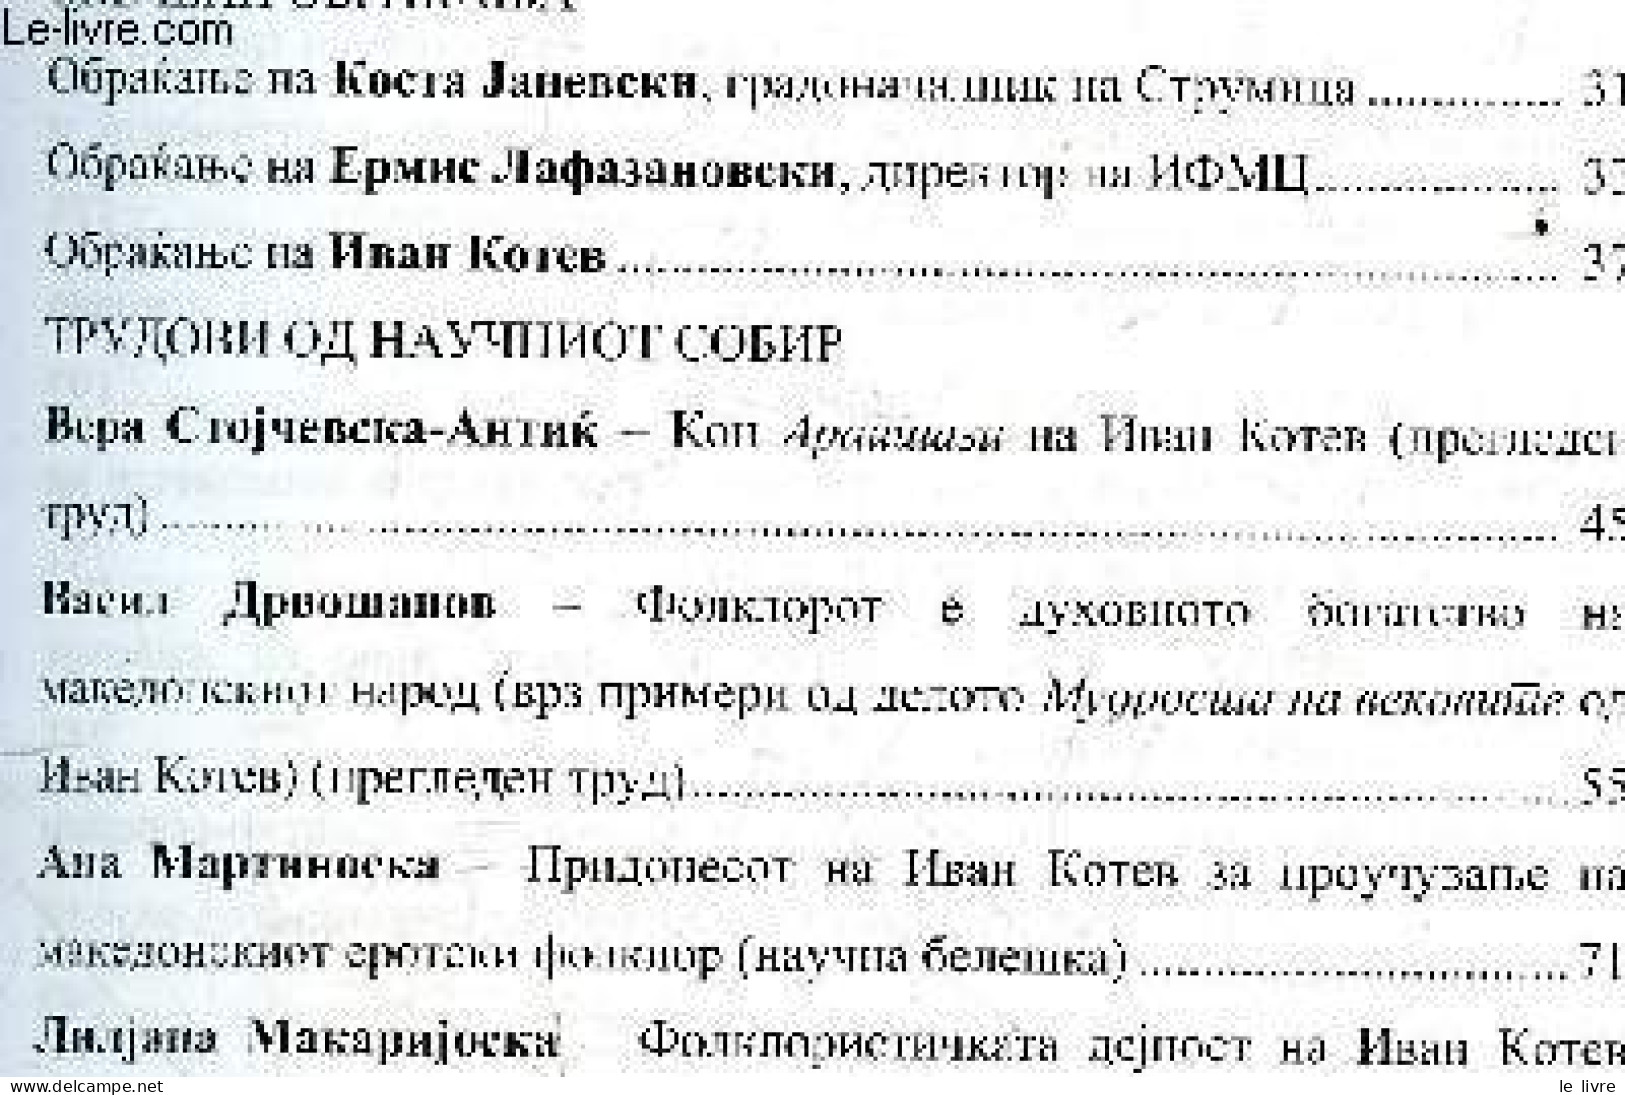 Makedonski Folklor - Godina LIII, Broj 81, Skopje, 2022 - UDC 398 / Folklore Macédonien - Volume 81, Annee LIII / Macedo - Cultural